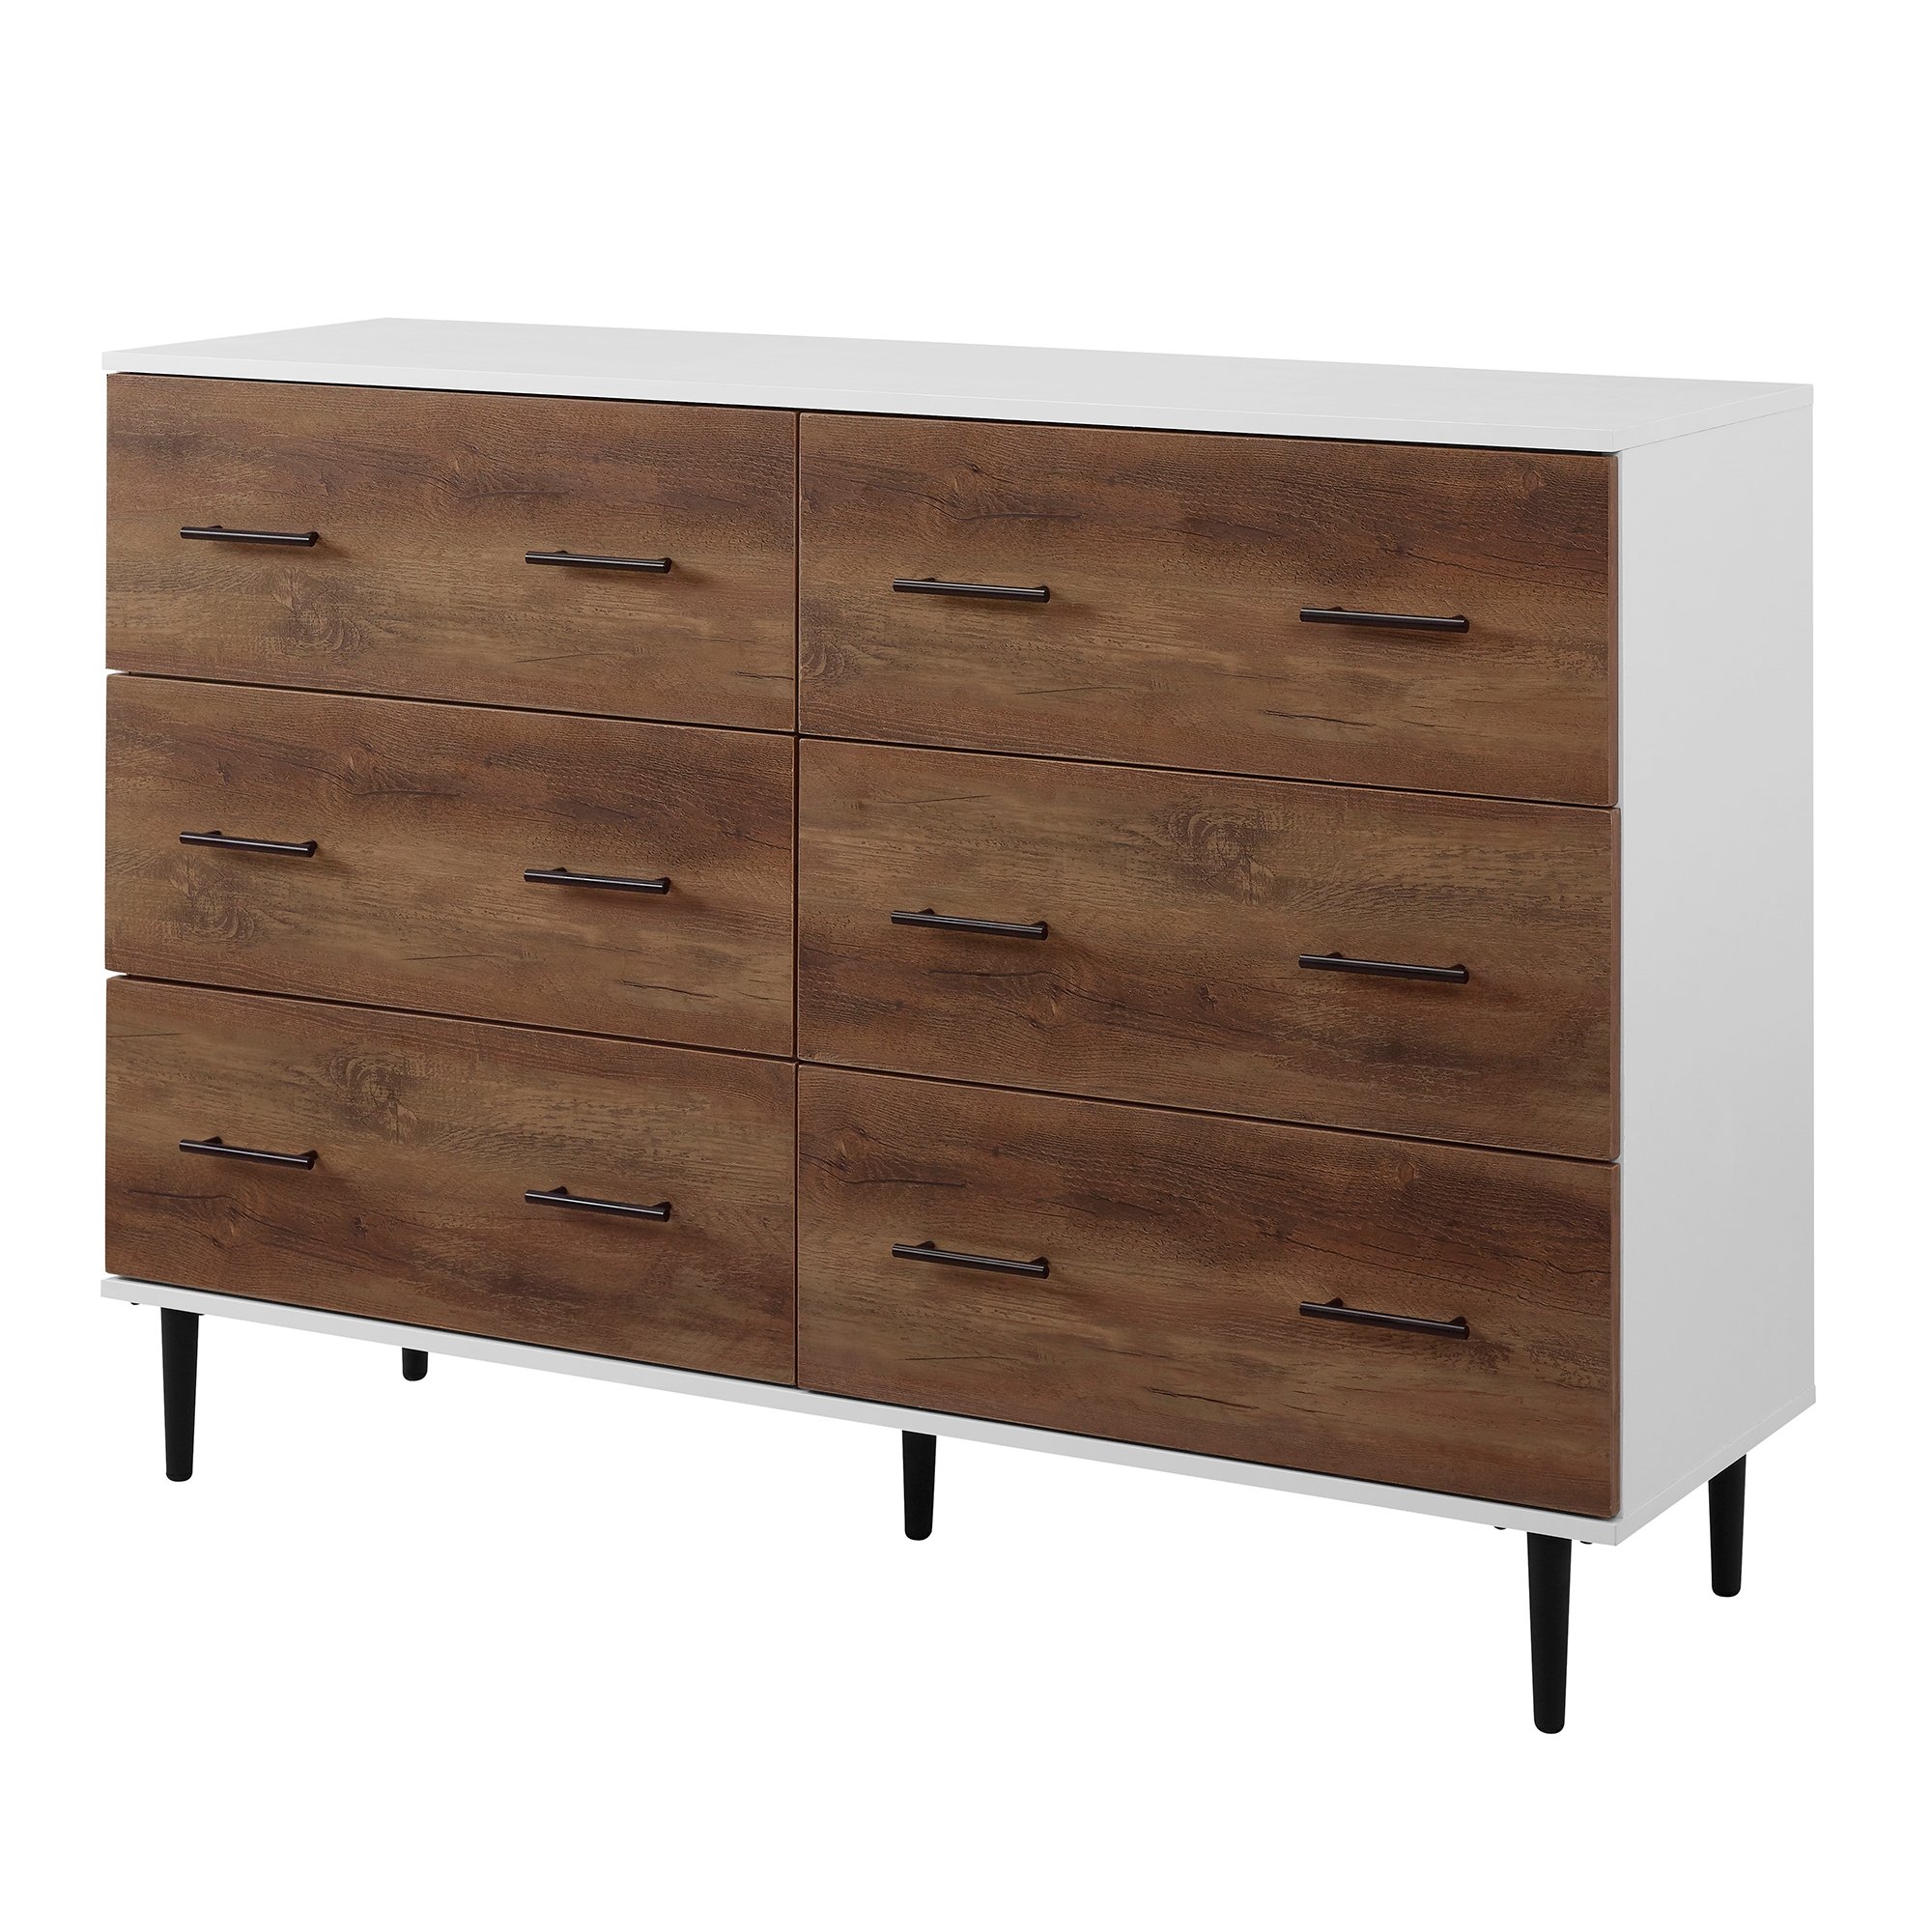 Savanna Modern Wood 6 Drawer Dresser - White/Rustic Oak - Image 1